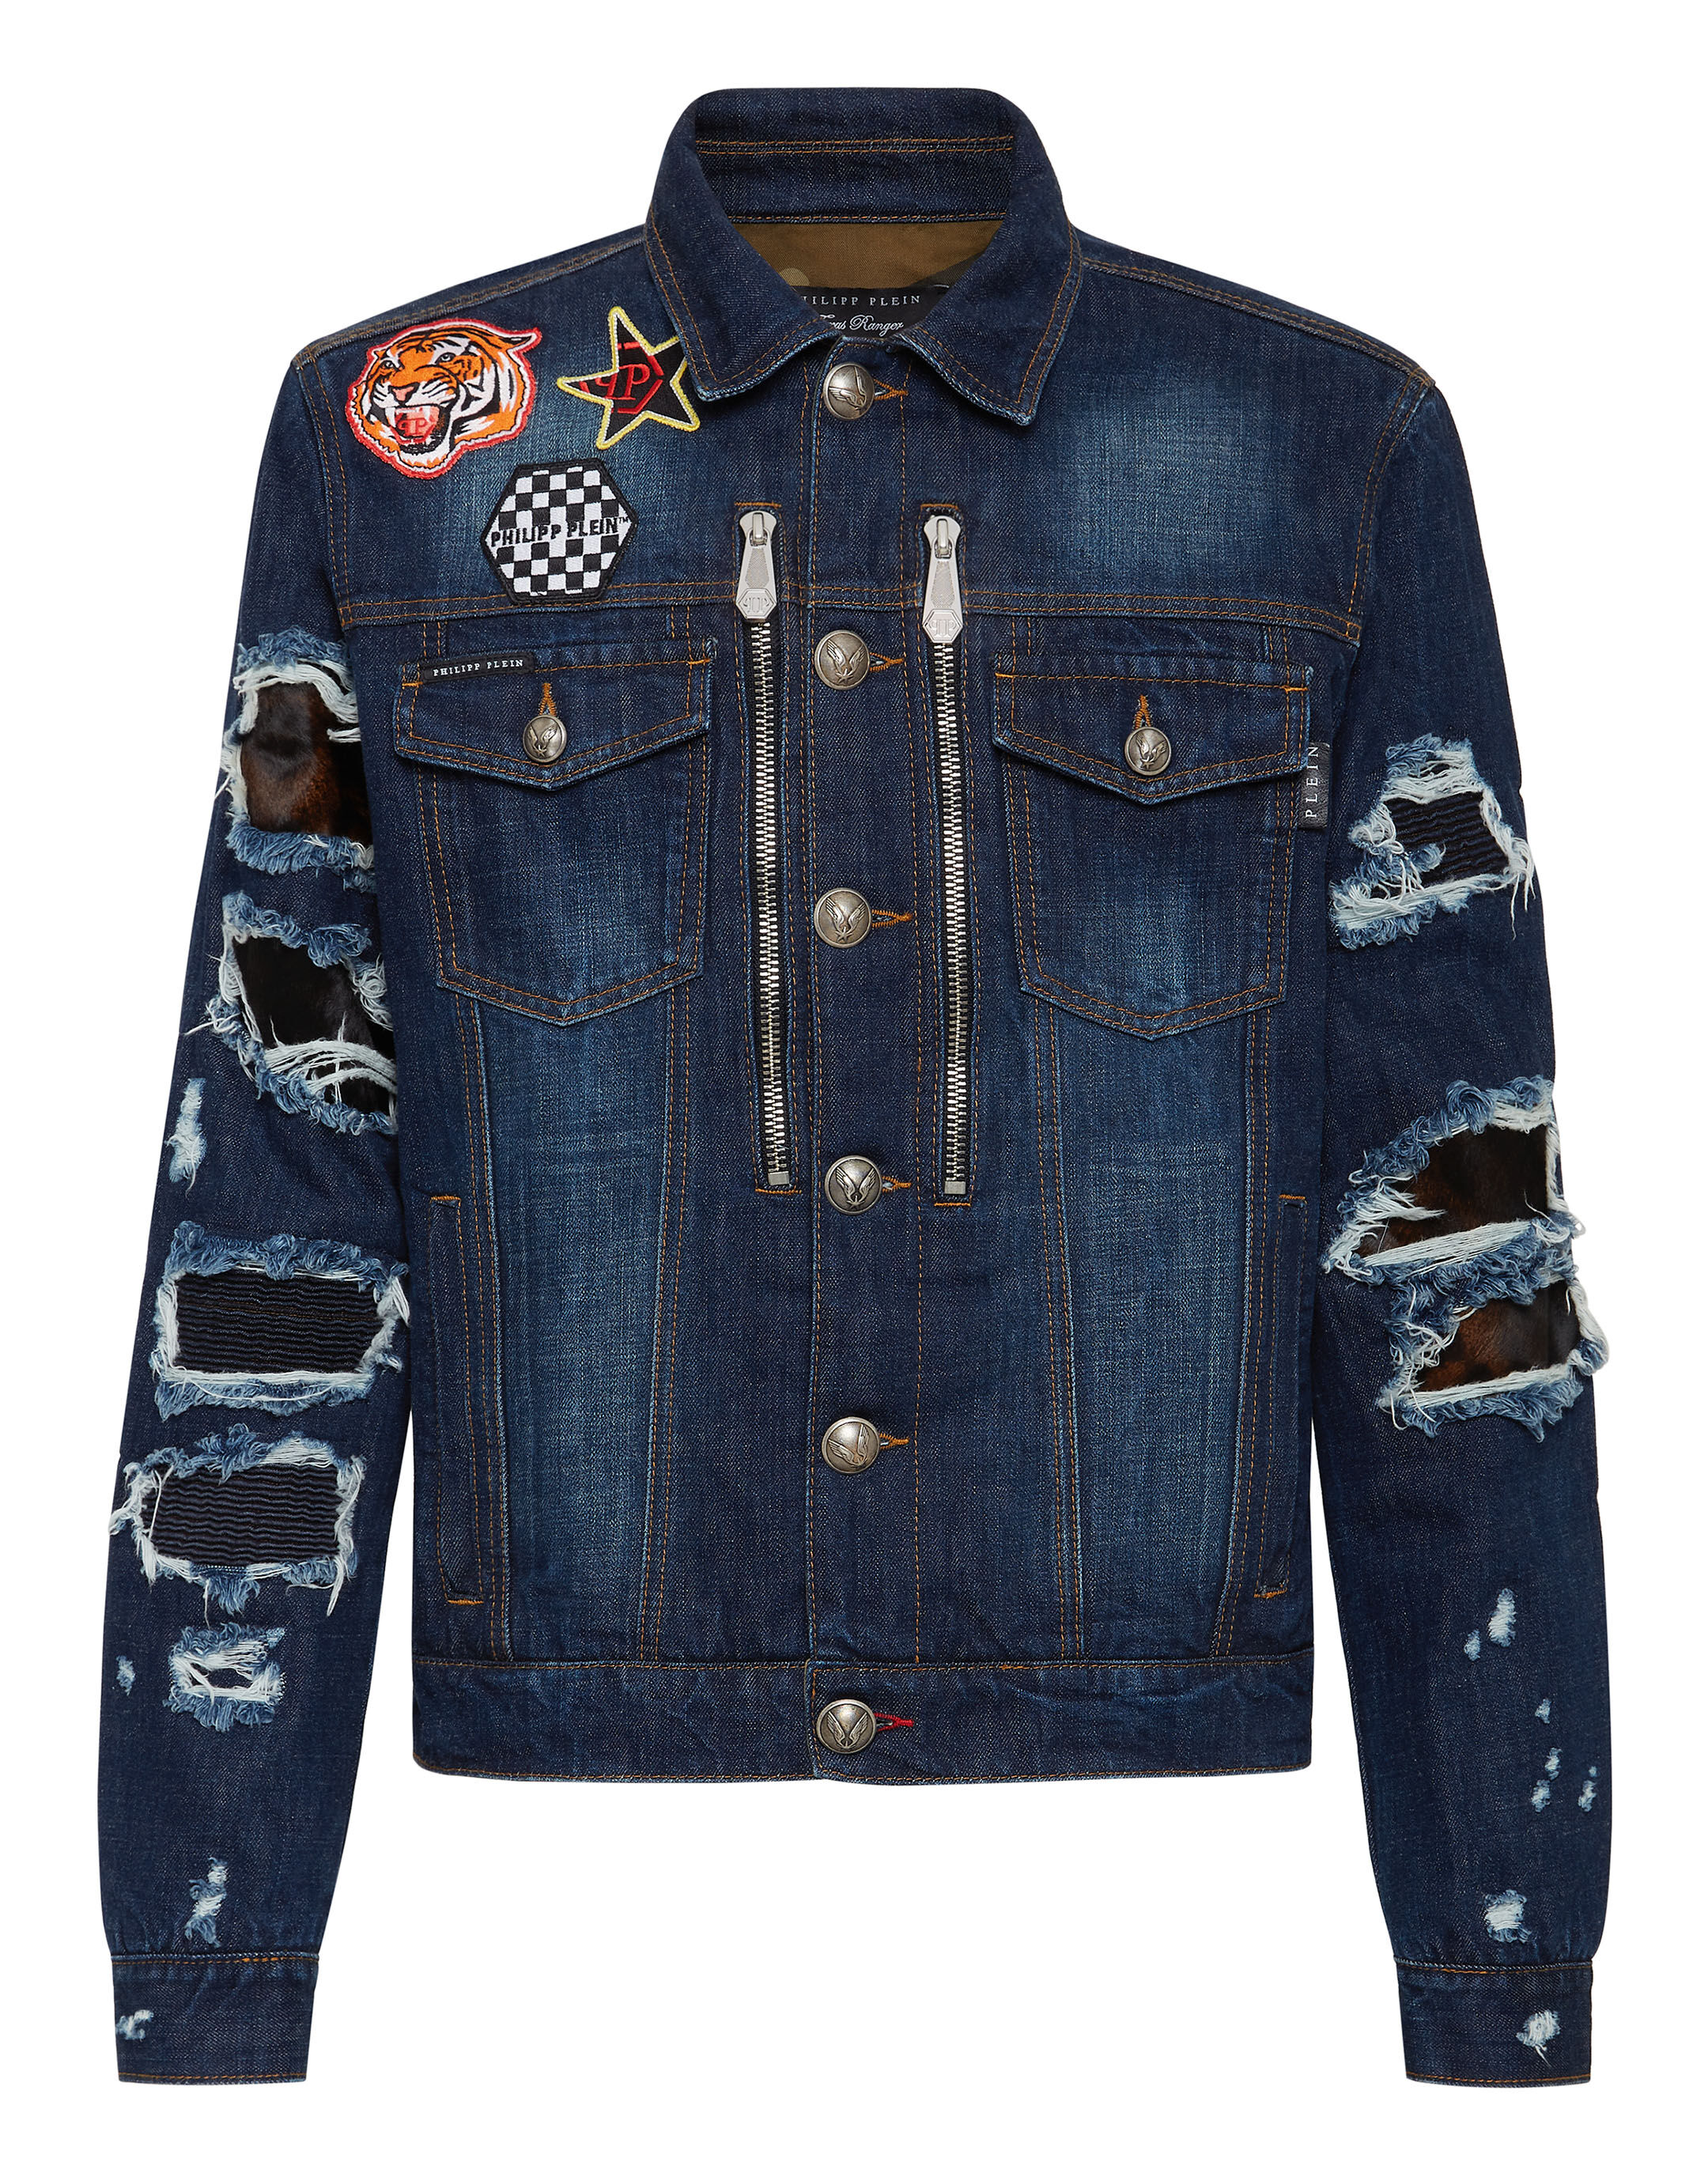 Patches on jacket | Denim jacket patches, Jackets, Denim fashion